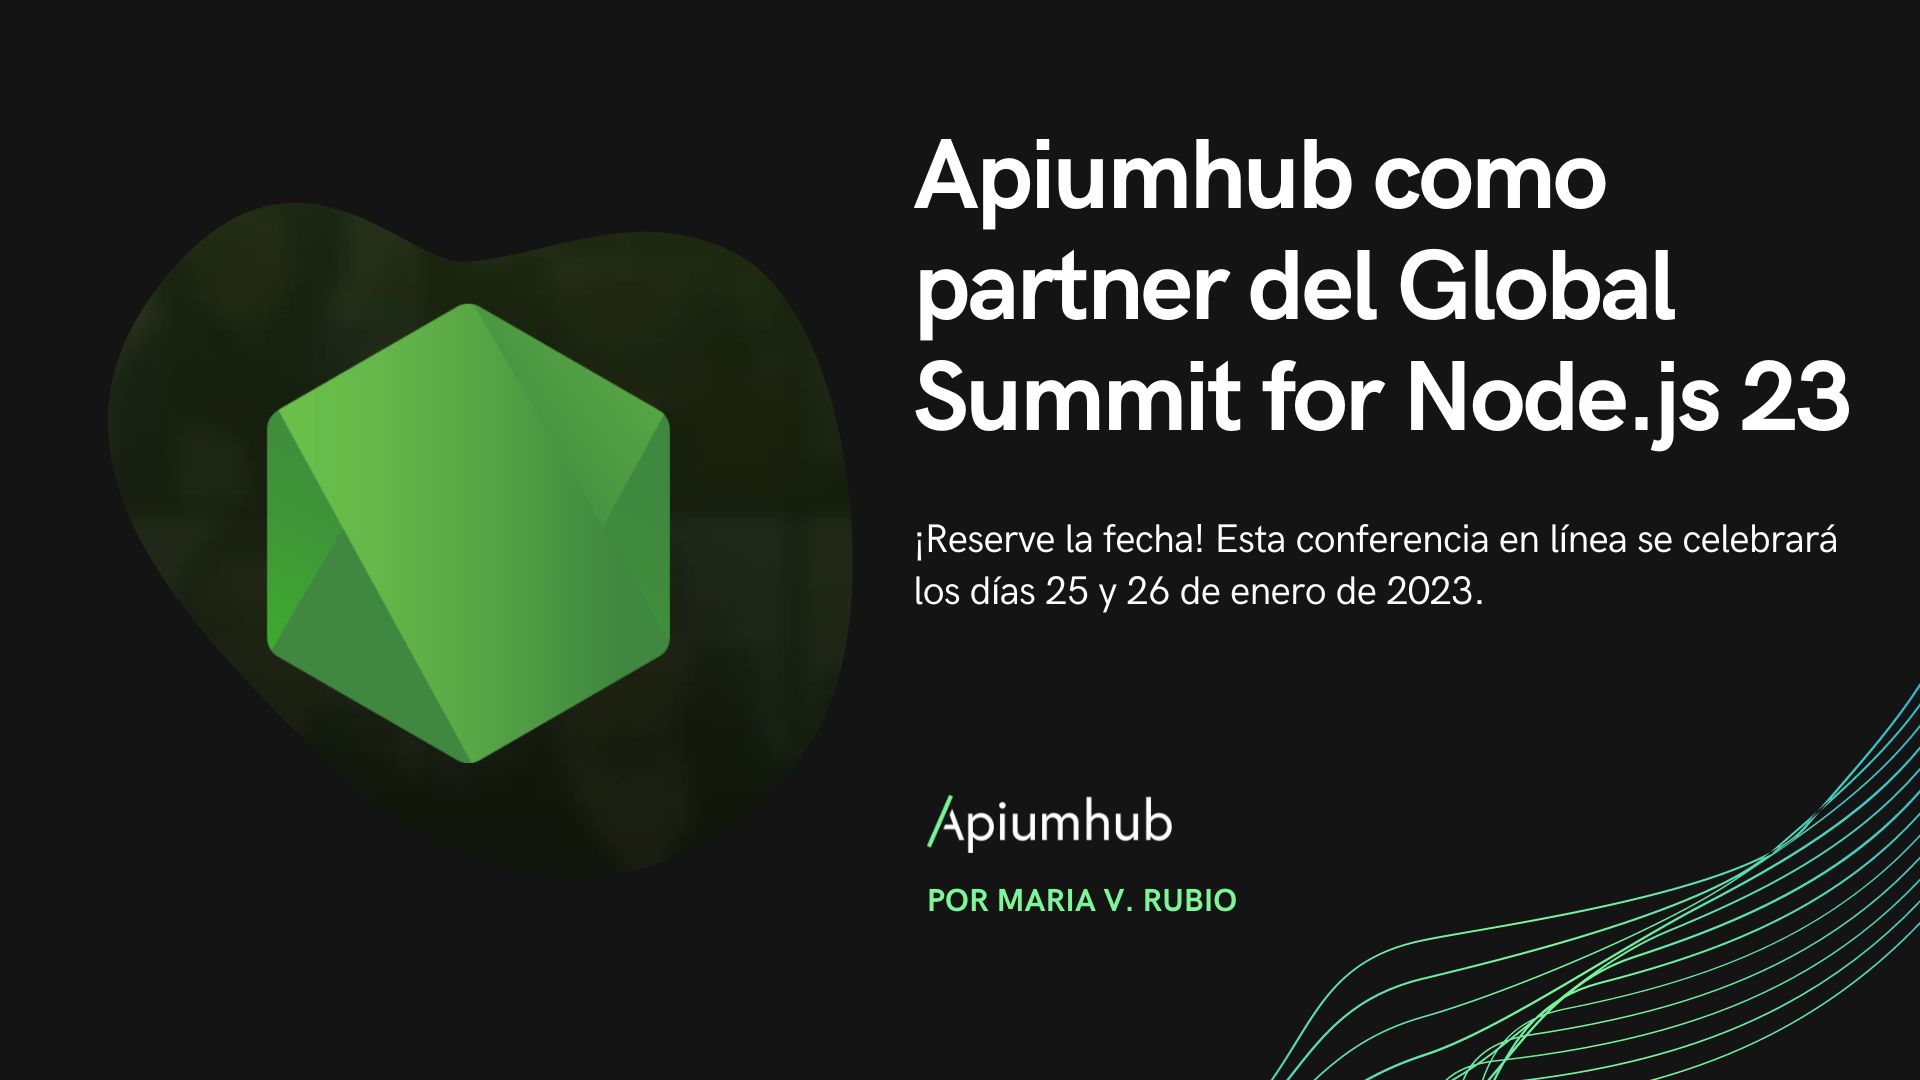 Apiumhub como partner del Global Summit for Node js